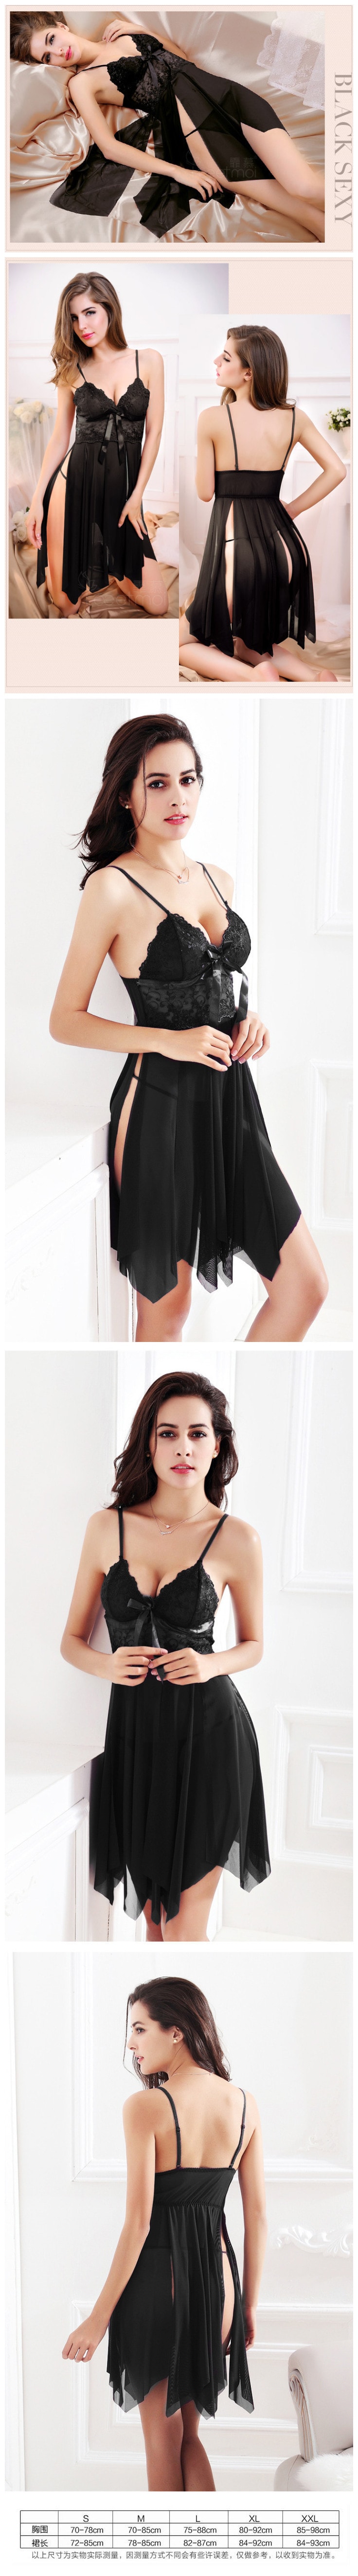 Sexy Lingeries Uniform Temptation Transparent Sleepwear Black Size M